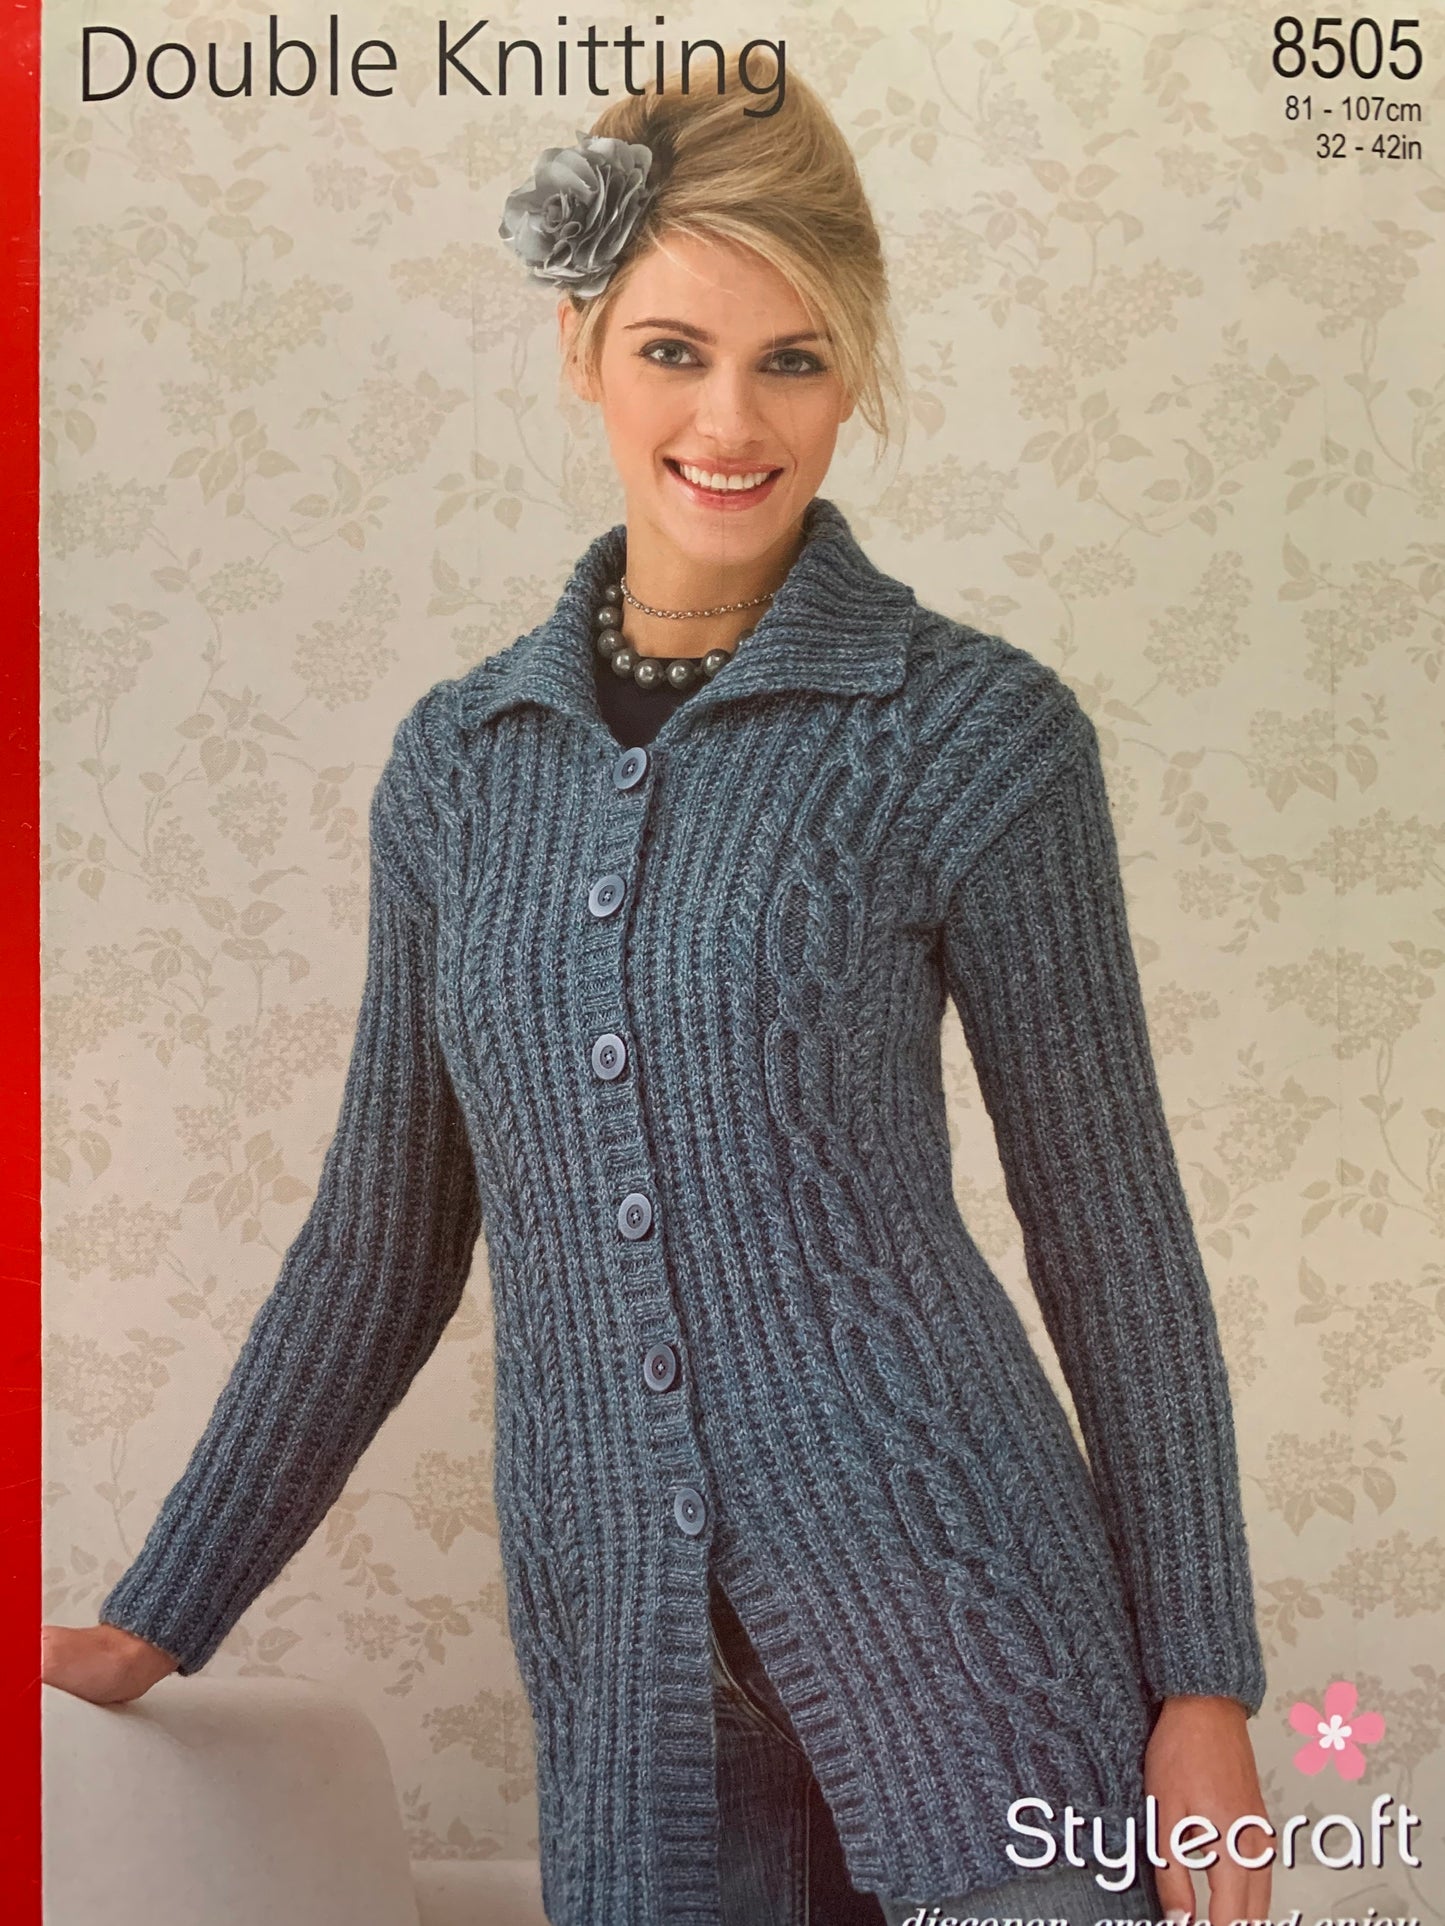 8505 Stylecraft dk Extra Special dk ladies long cardigan knitting pattern